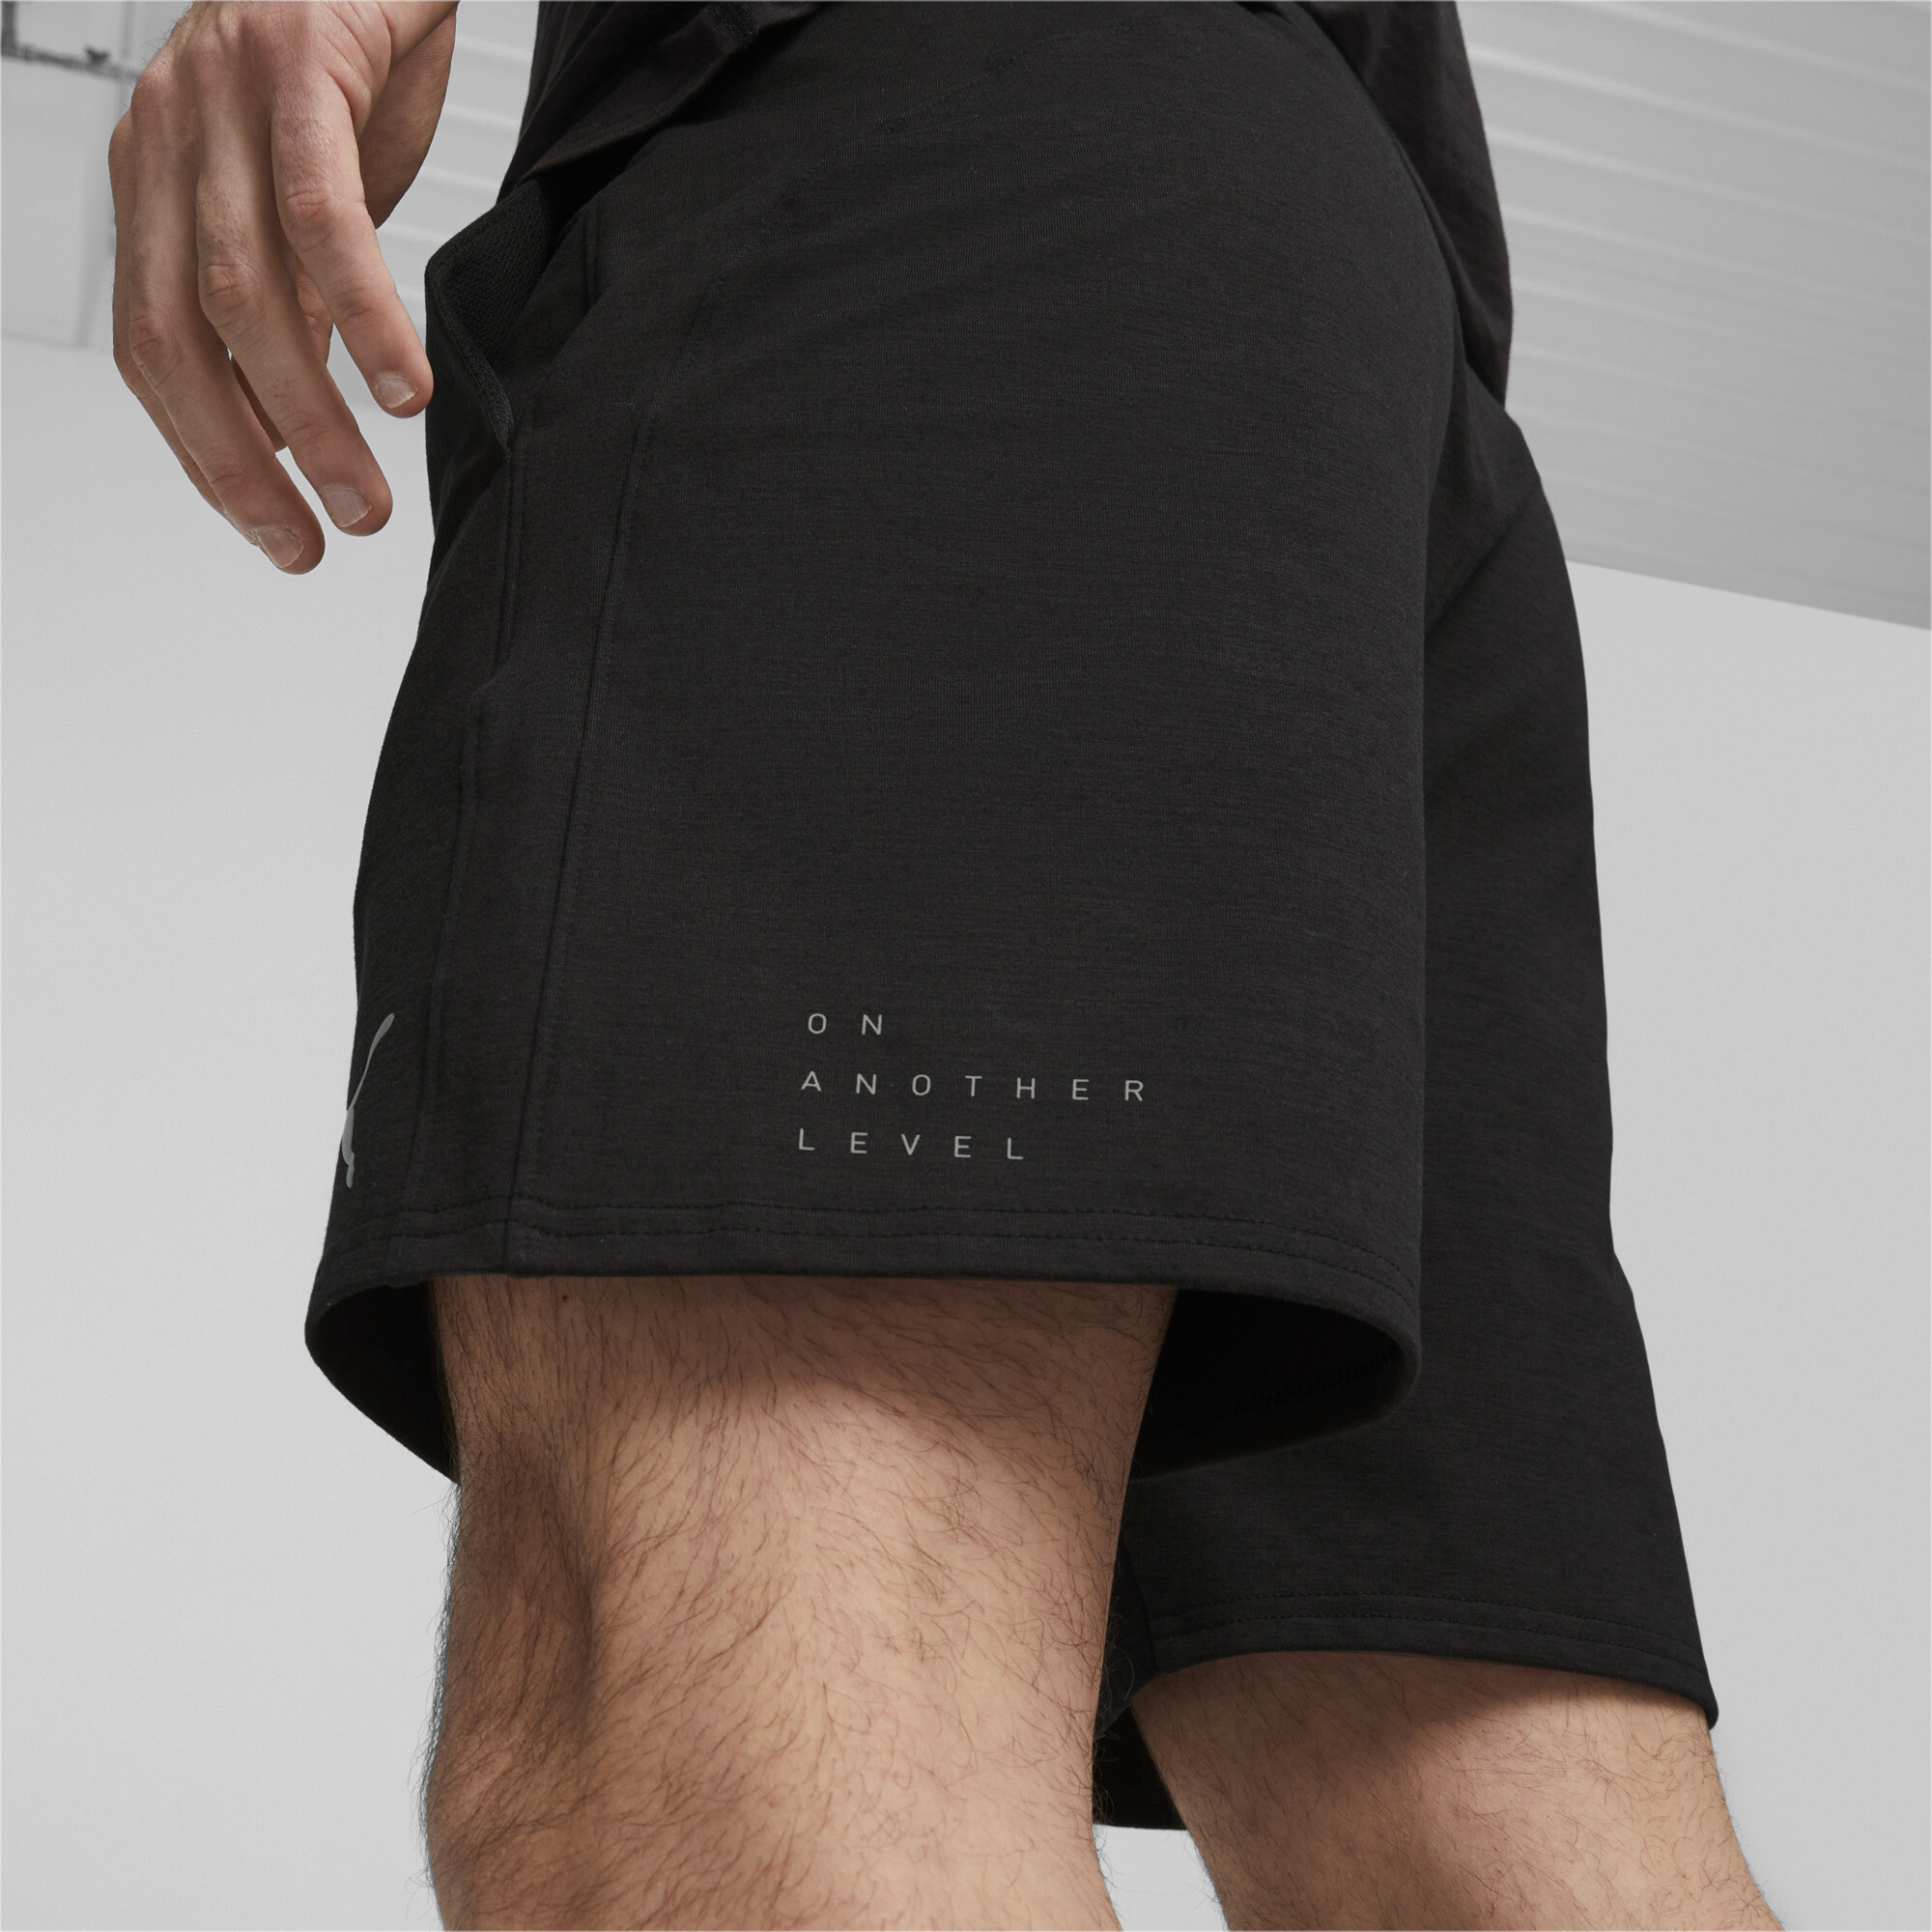 Men's PUMA Train Cloudspun 7 Shorts In Black, Size Large